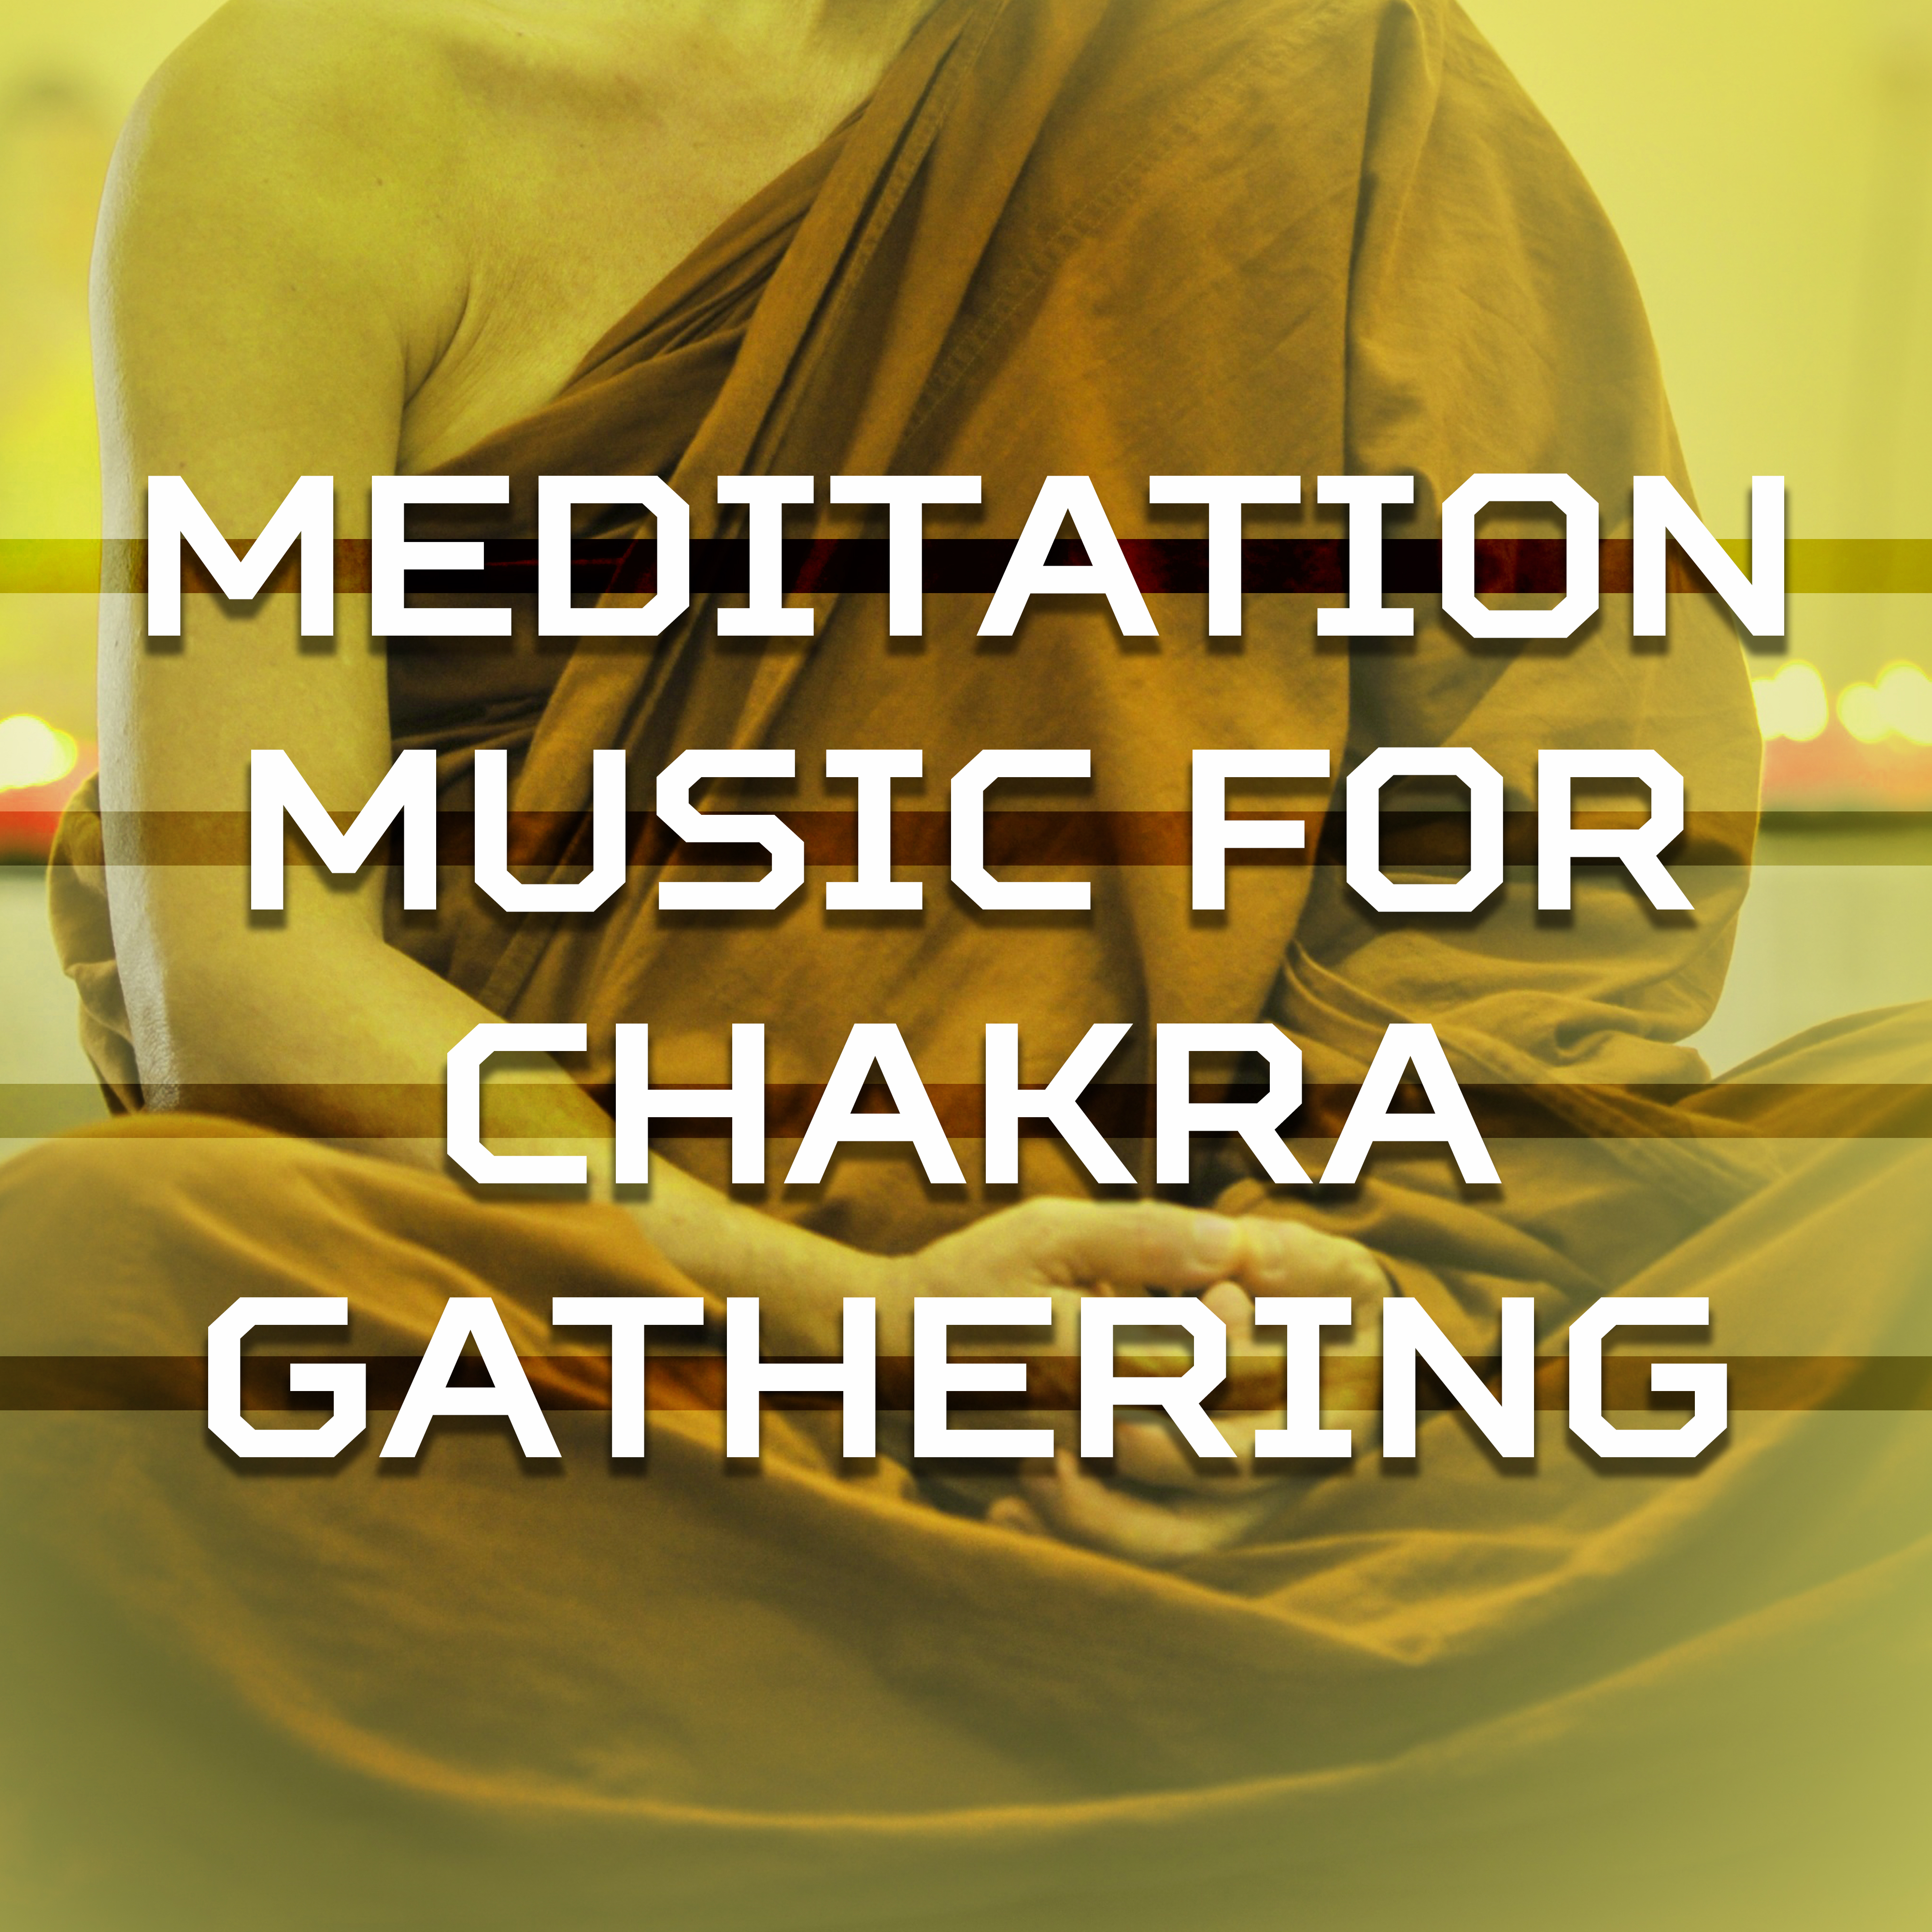 Meditation Music for Chakra Gathering – Buddha Lounge, Yoga Relaxation, Stress Relief, New Age Meditation